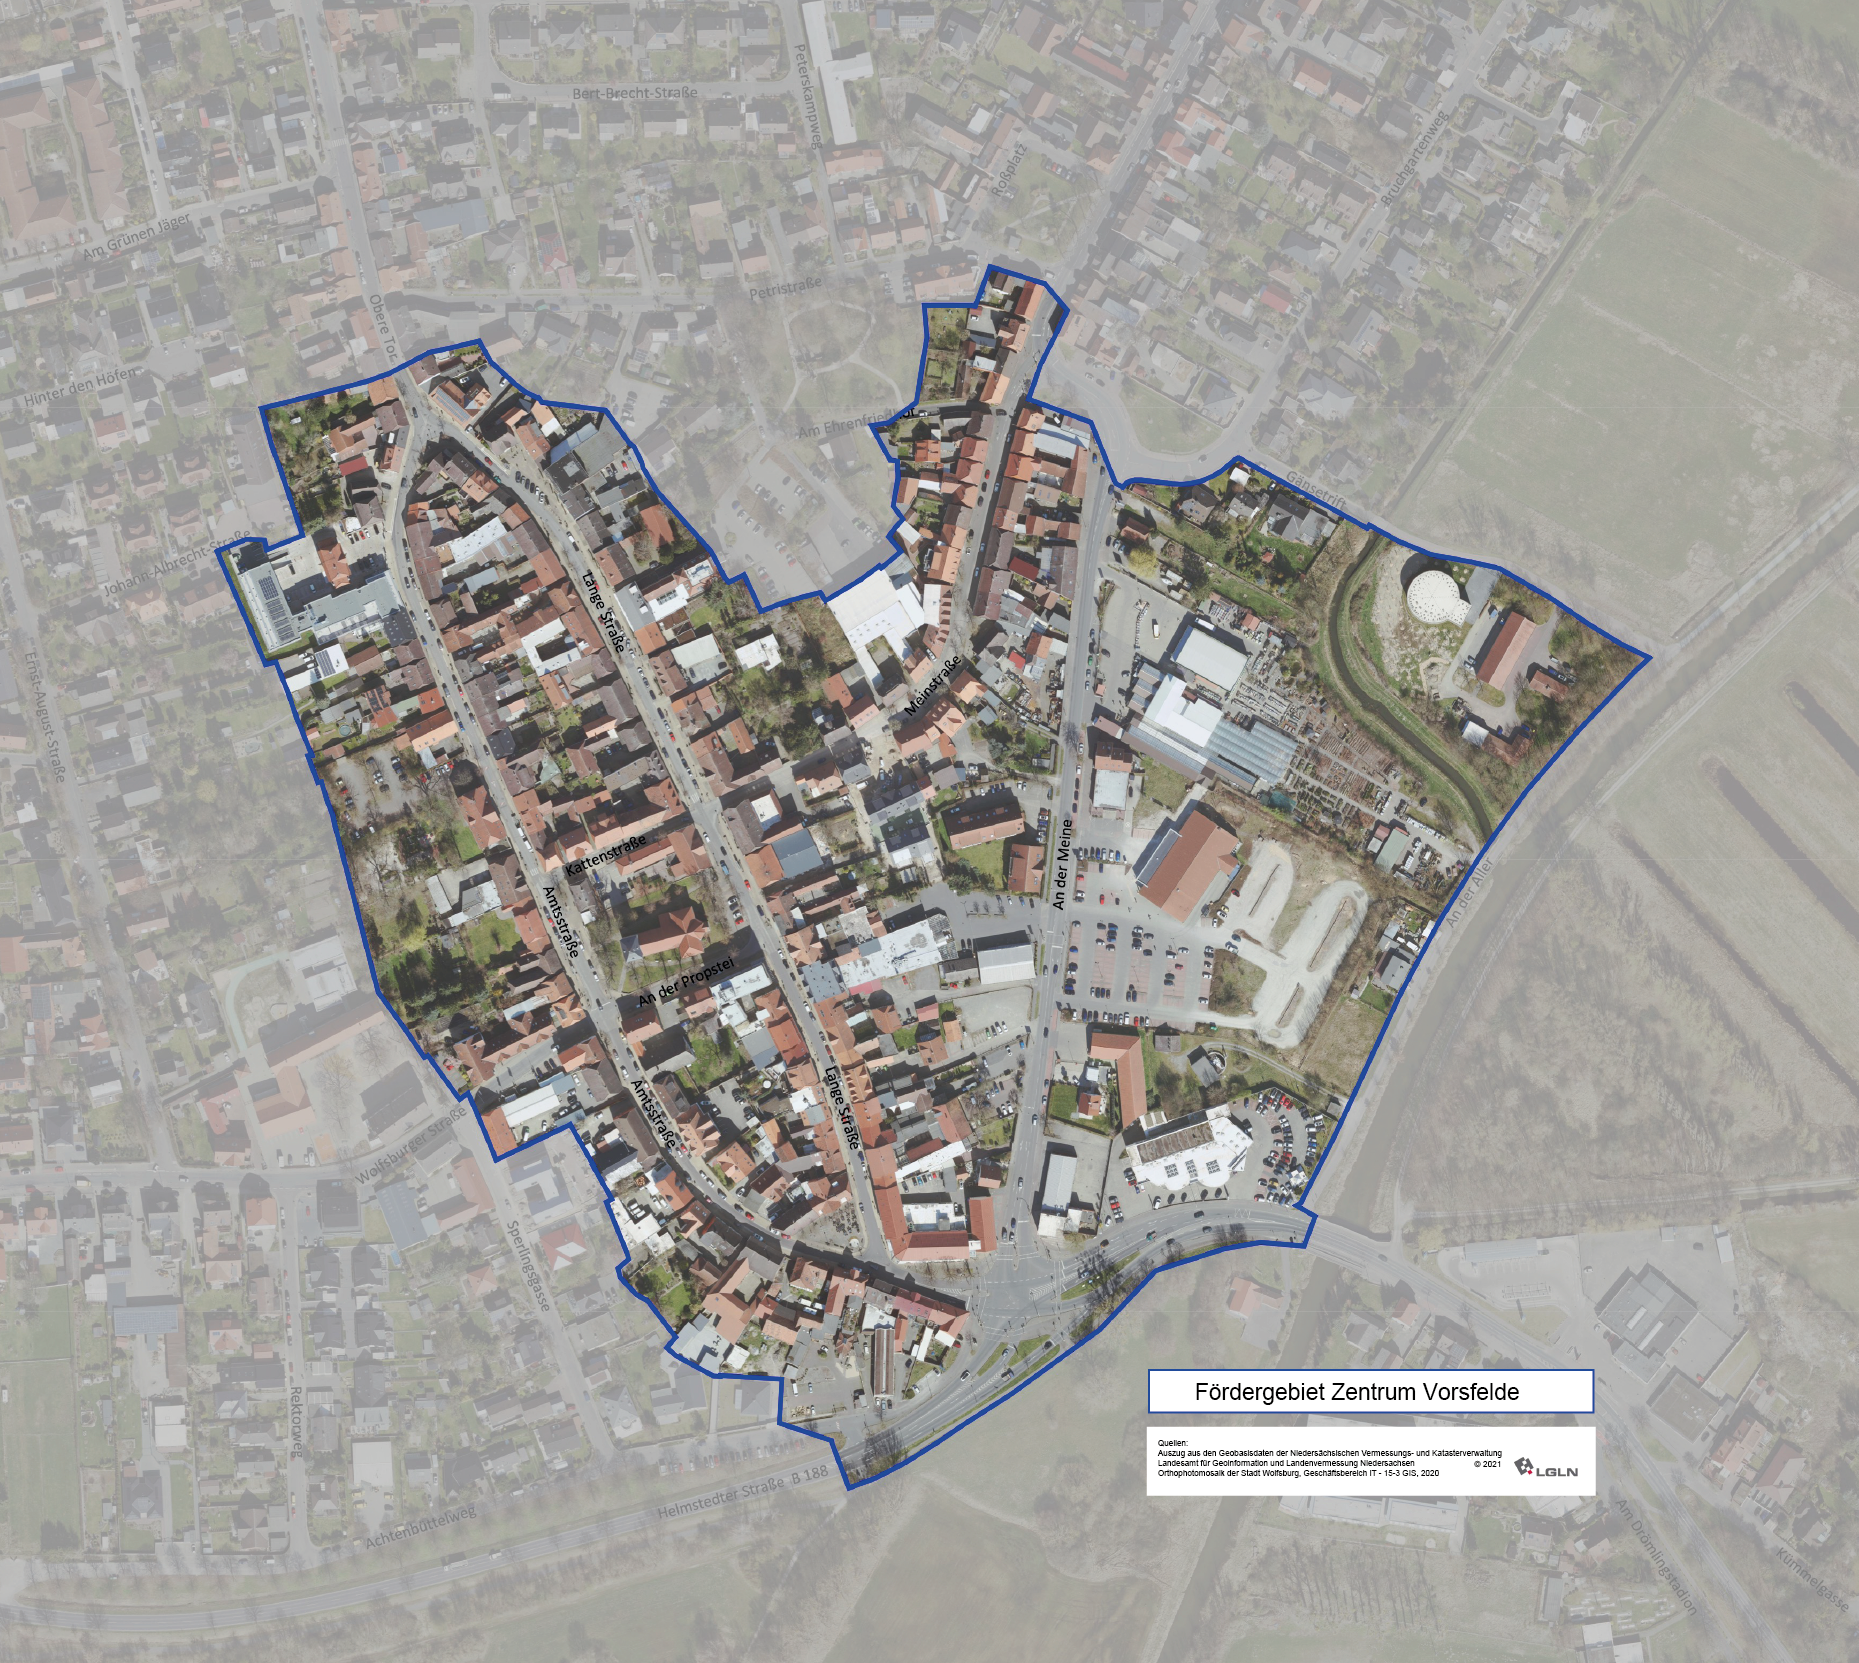 Presentation of the Vorsfelde development area